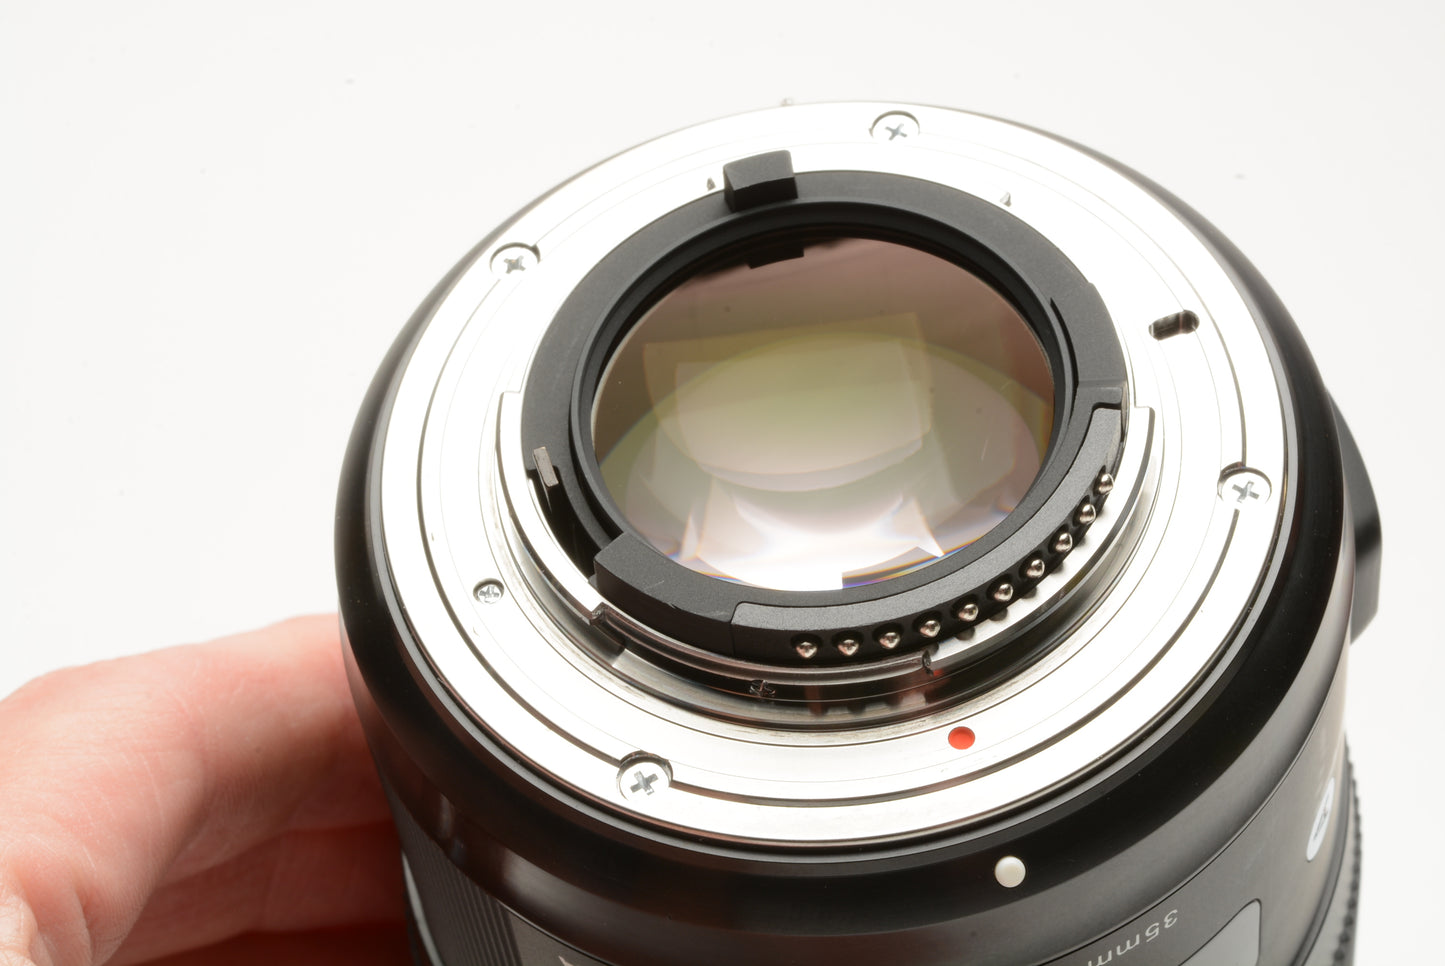 Sigma USA 35mm f1.4 DG Art lens, caps + lens hood, barely used, Nikon AF Mount, USA